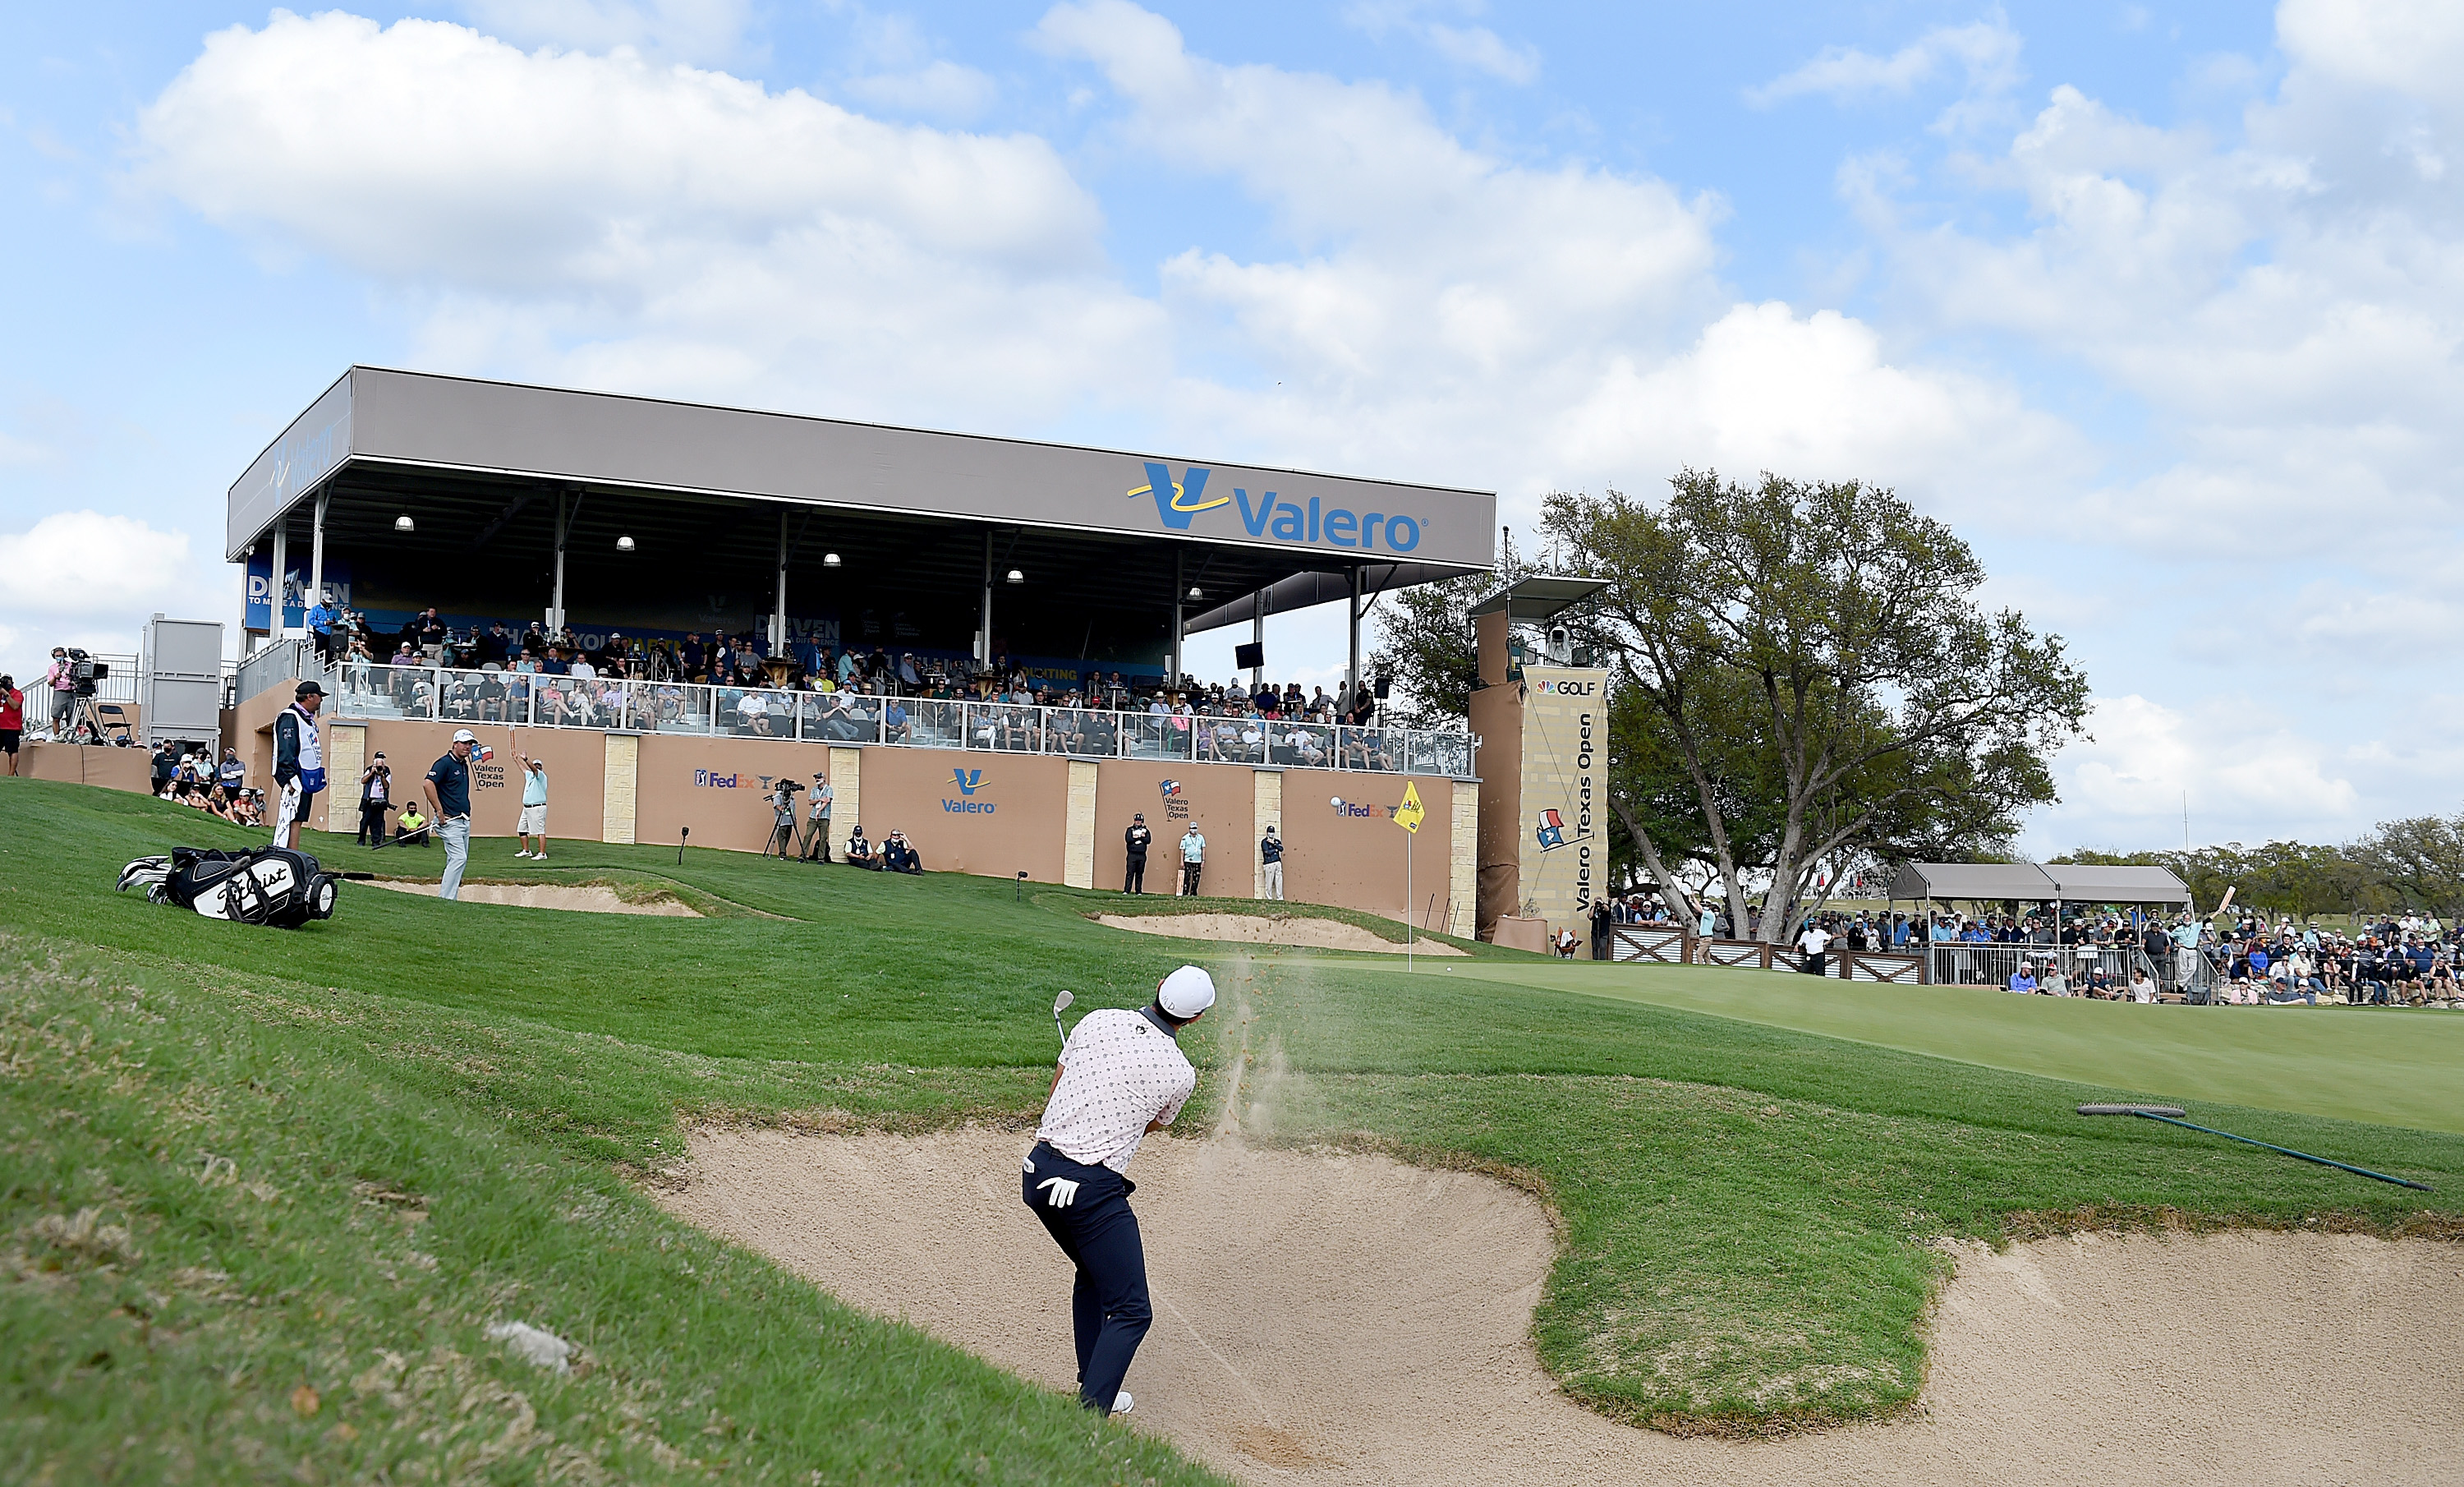 How to watch Golfs Valero Texas Open 2022